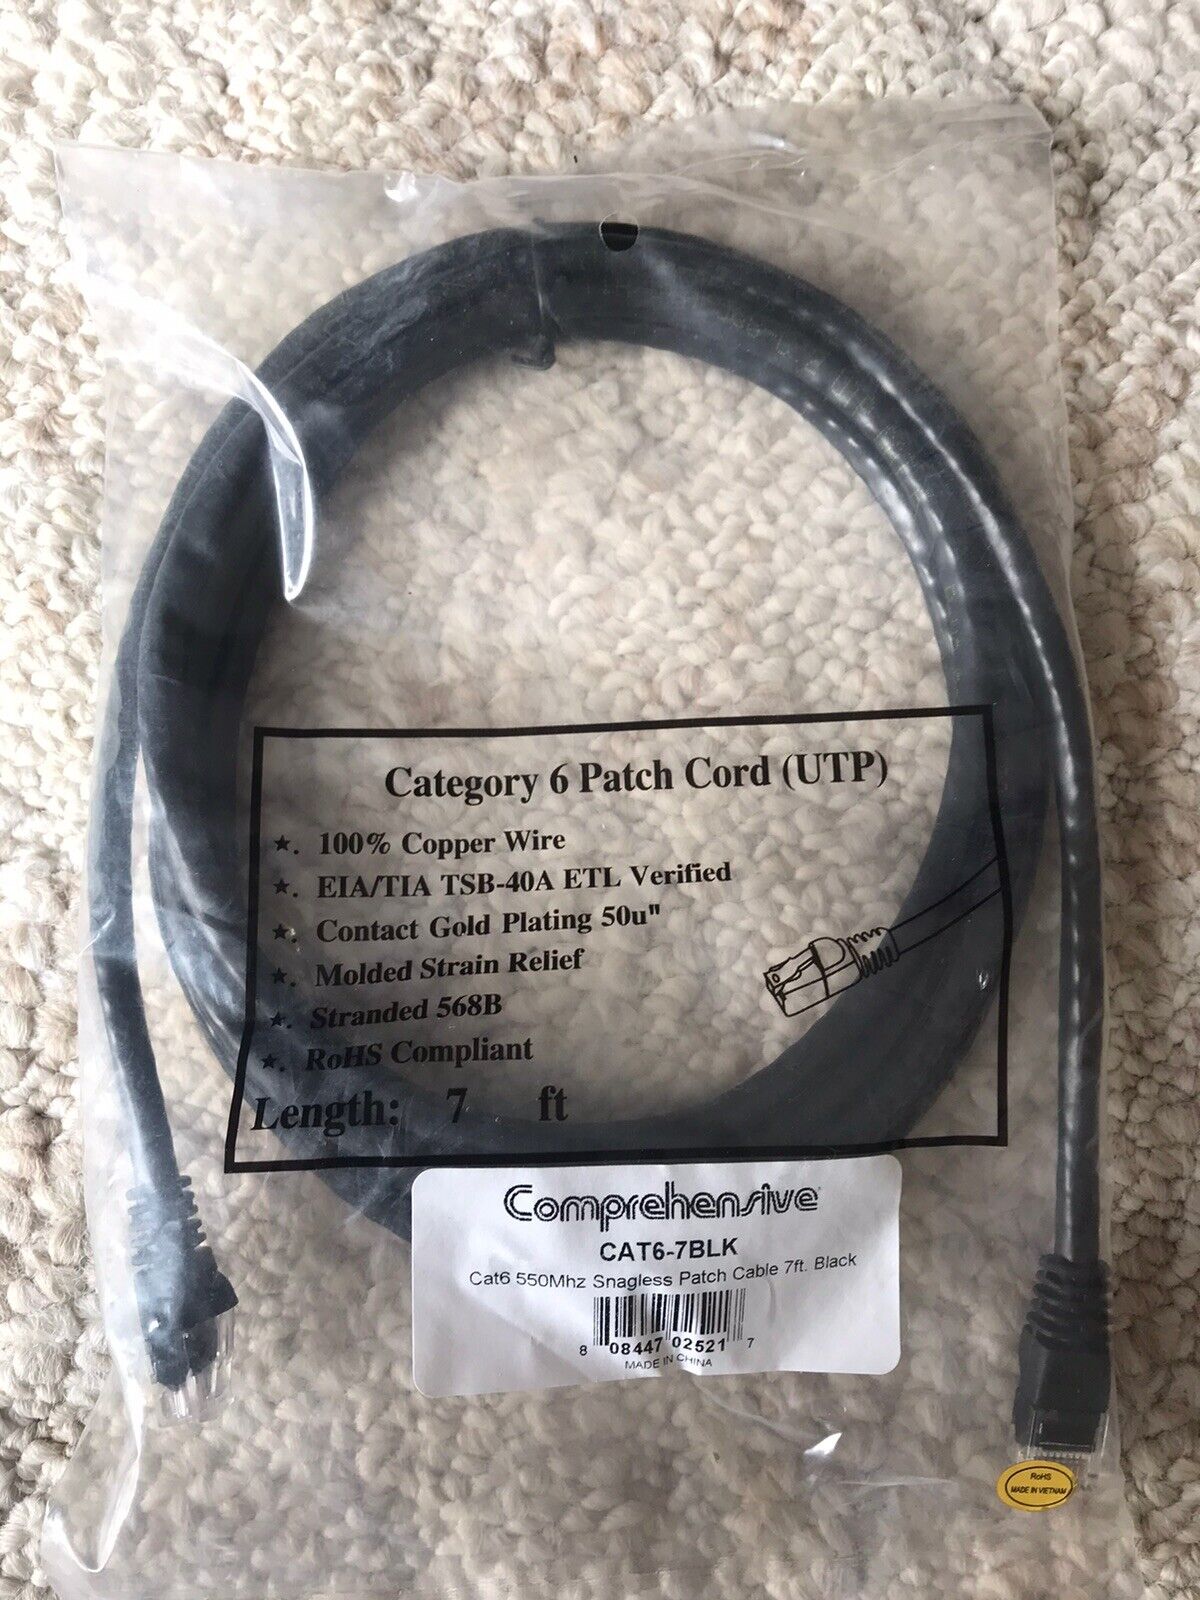 Comprehensive CAT6-7BLK Cat6 550 Mhz Snagless Patch Cable 7ft Black OEM